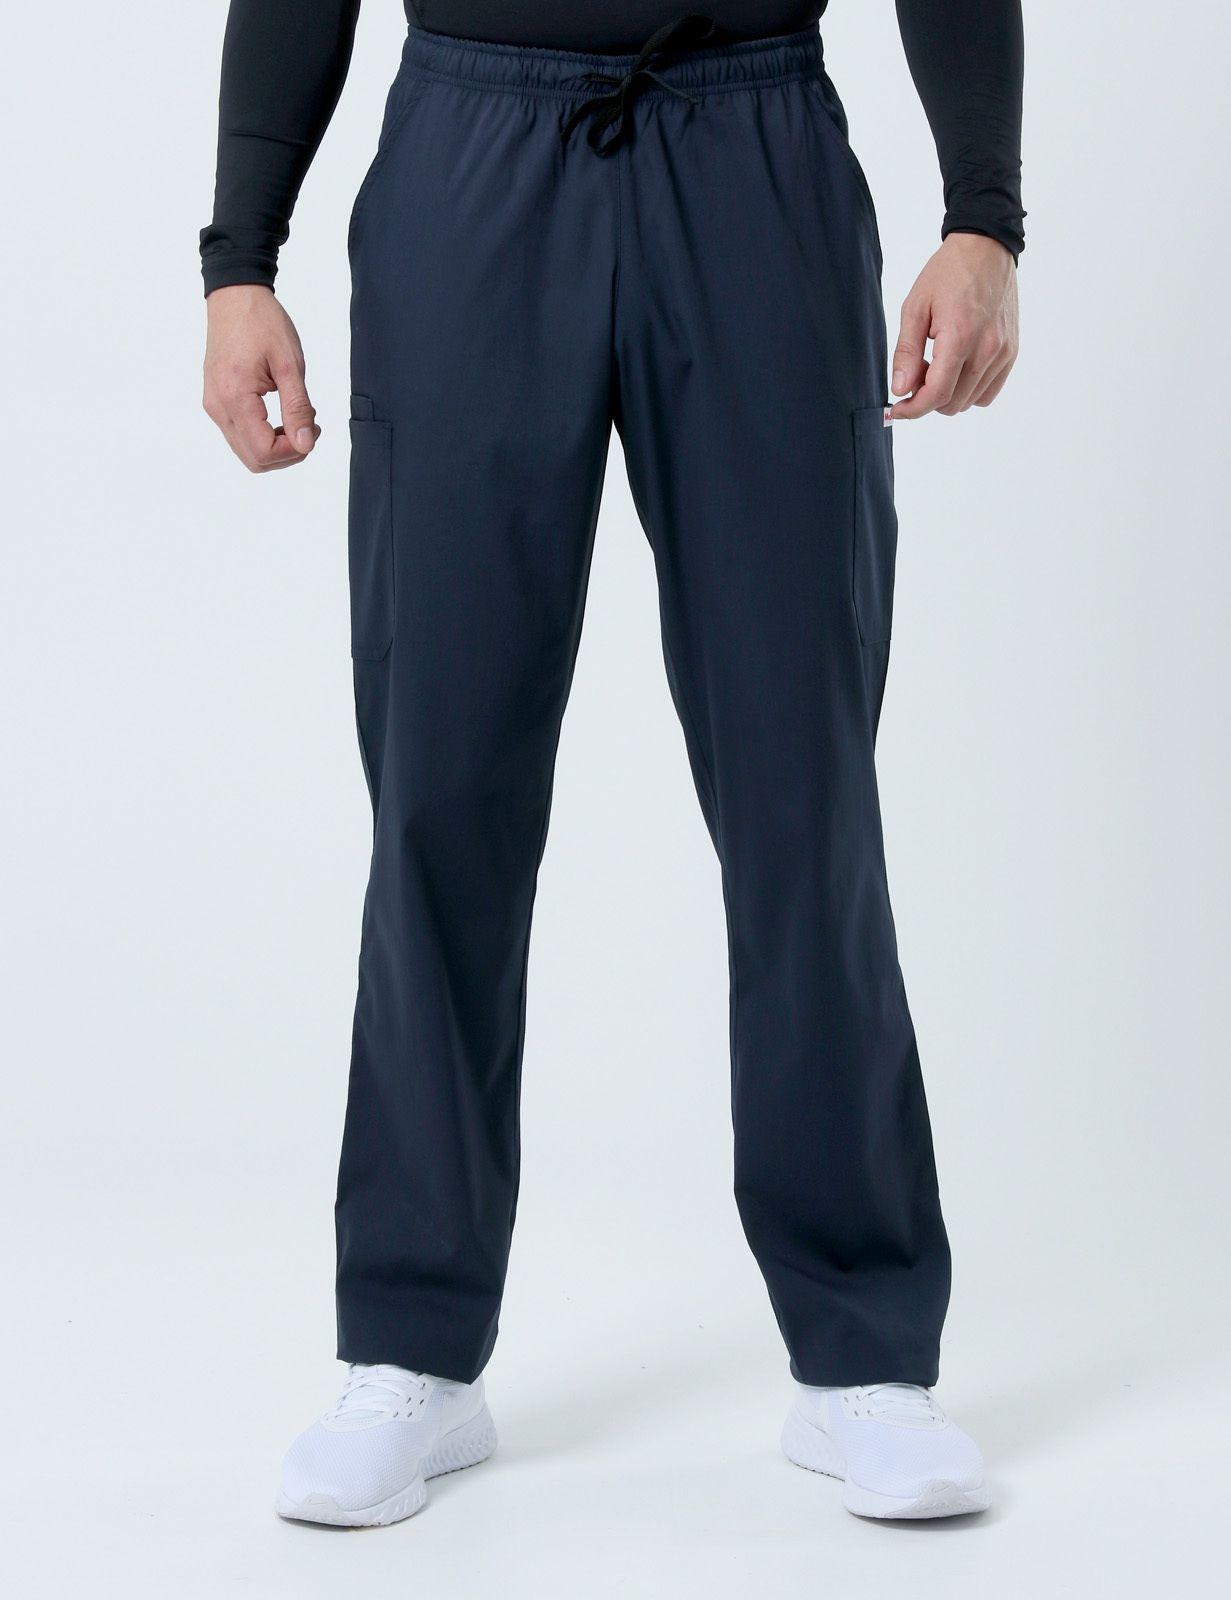 Men's Cargo Performance Pants - Navy - 2X Large